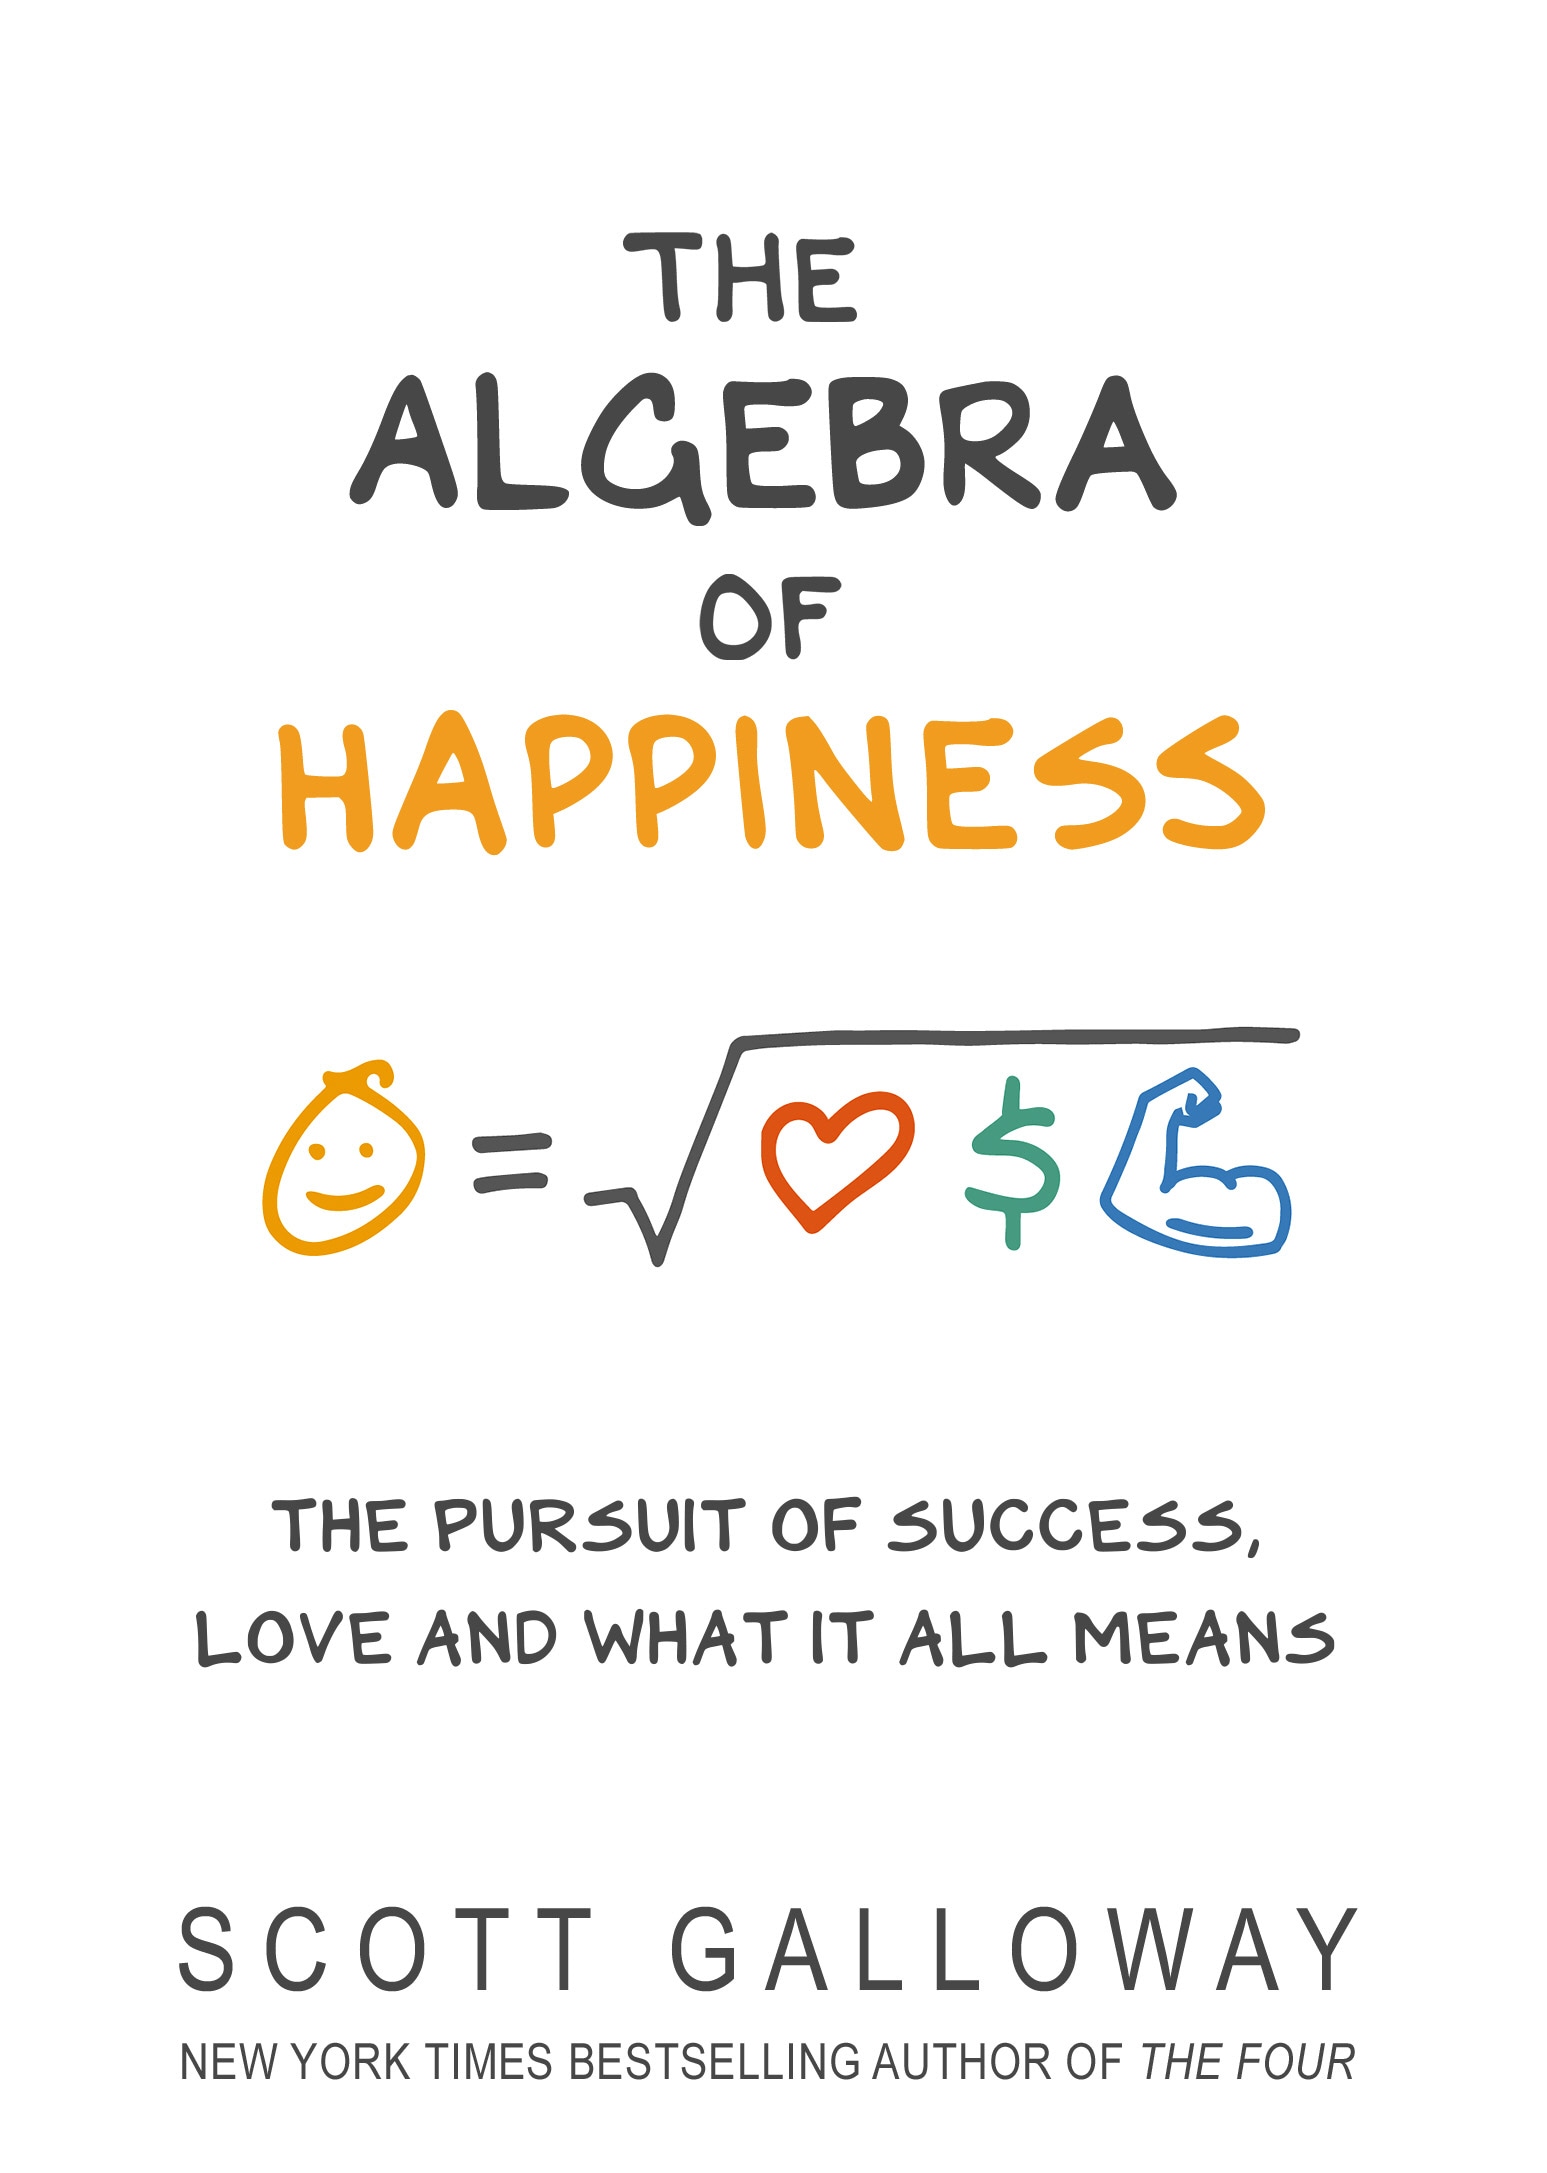 Book “The Algebra of Happiness” by Scott Galloway — June 13, 2019